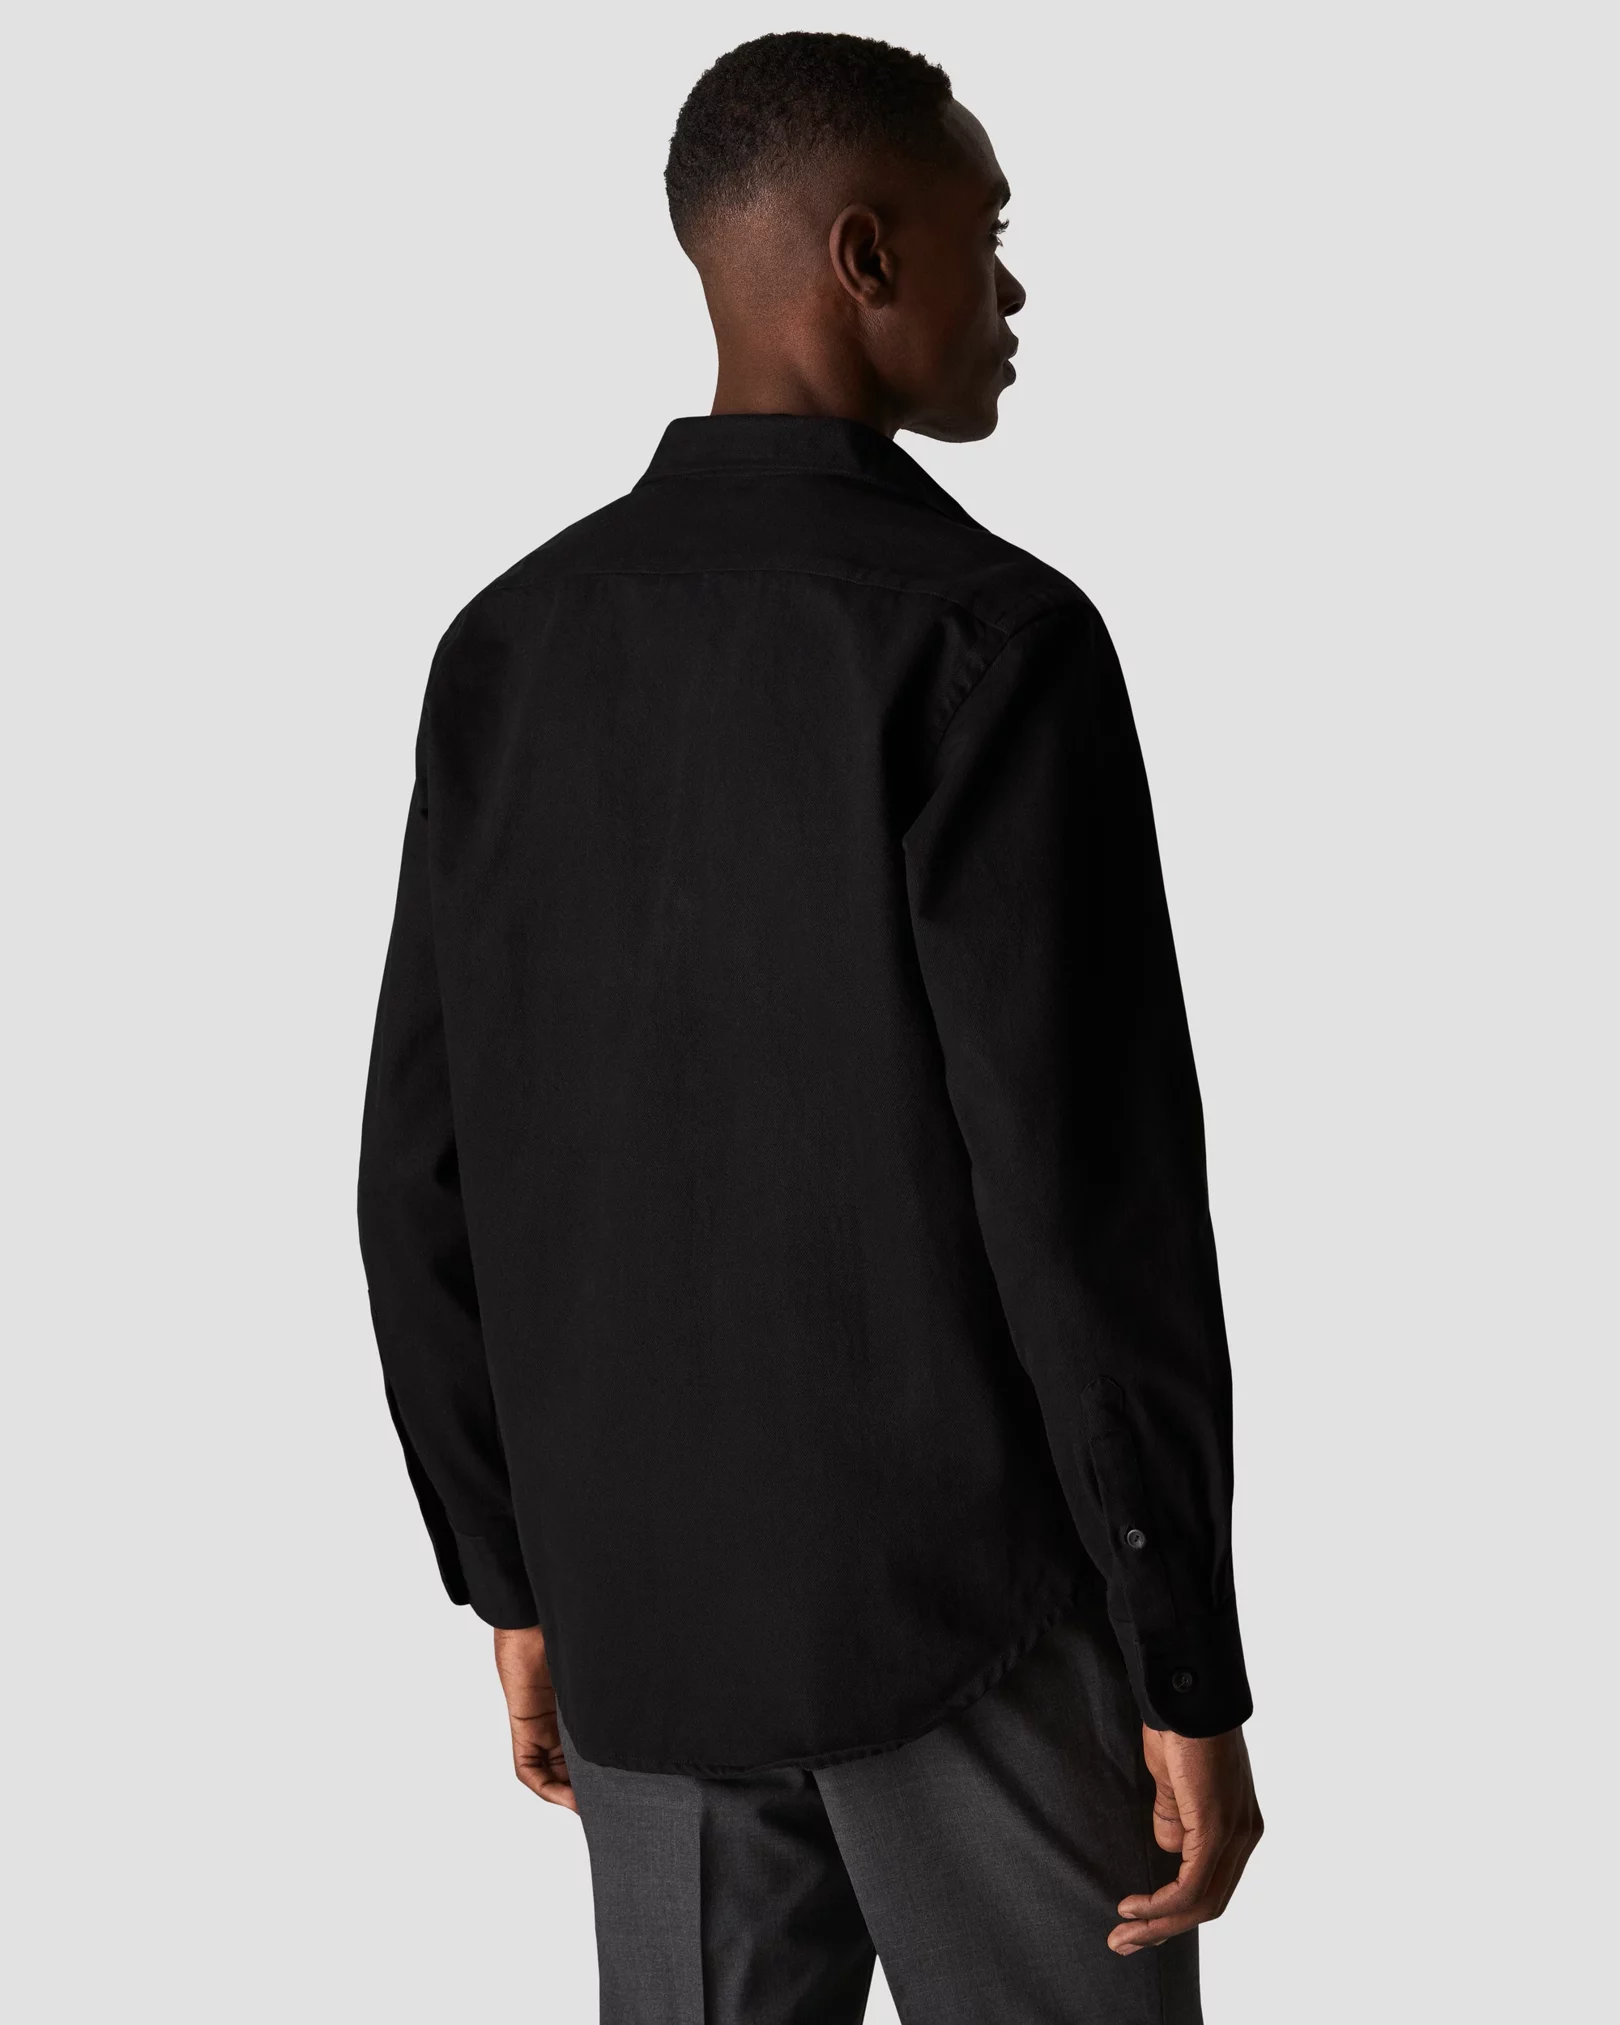 Eton - black heavy twill overshirt